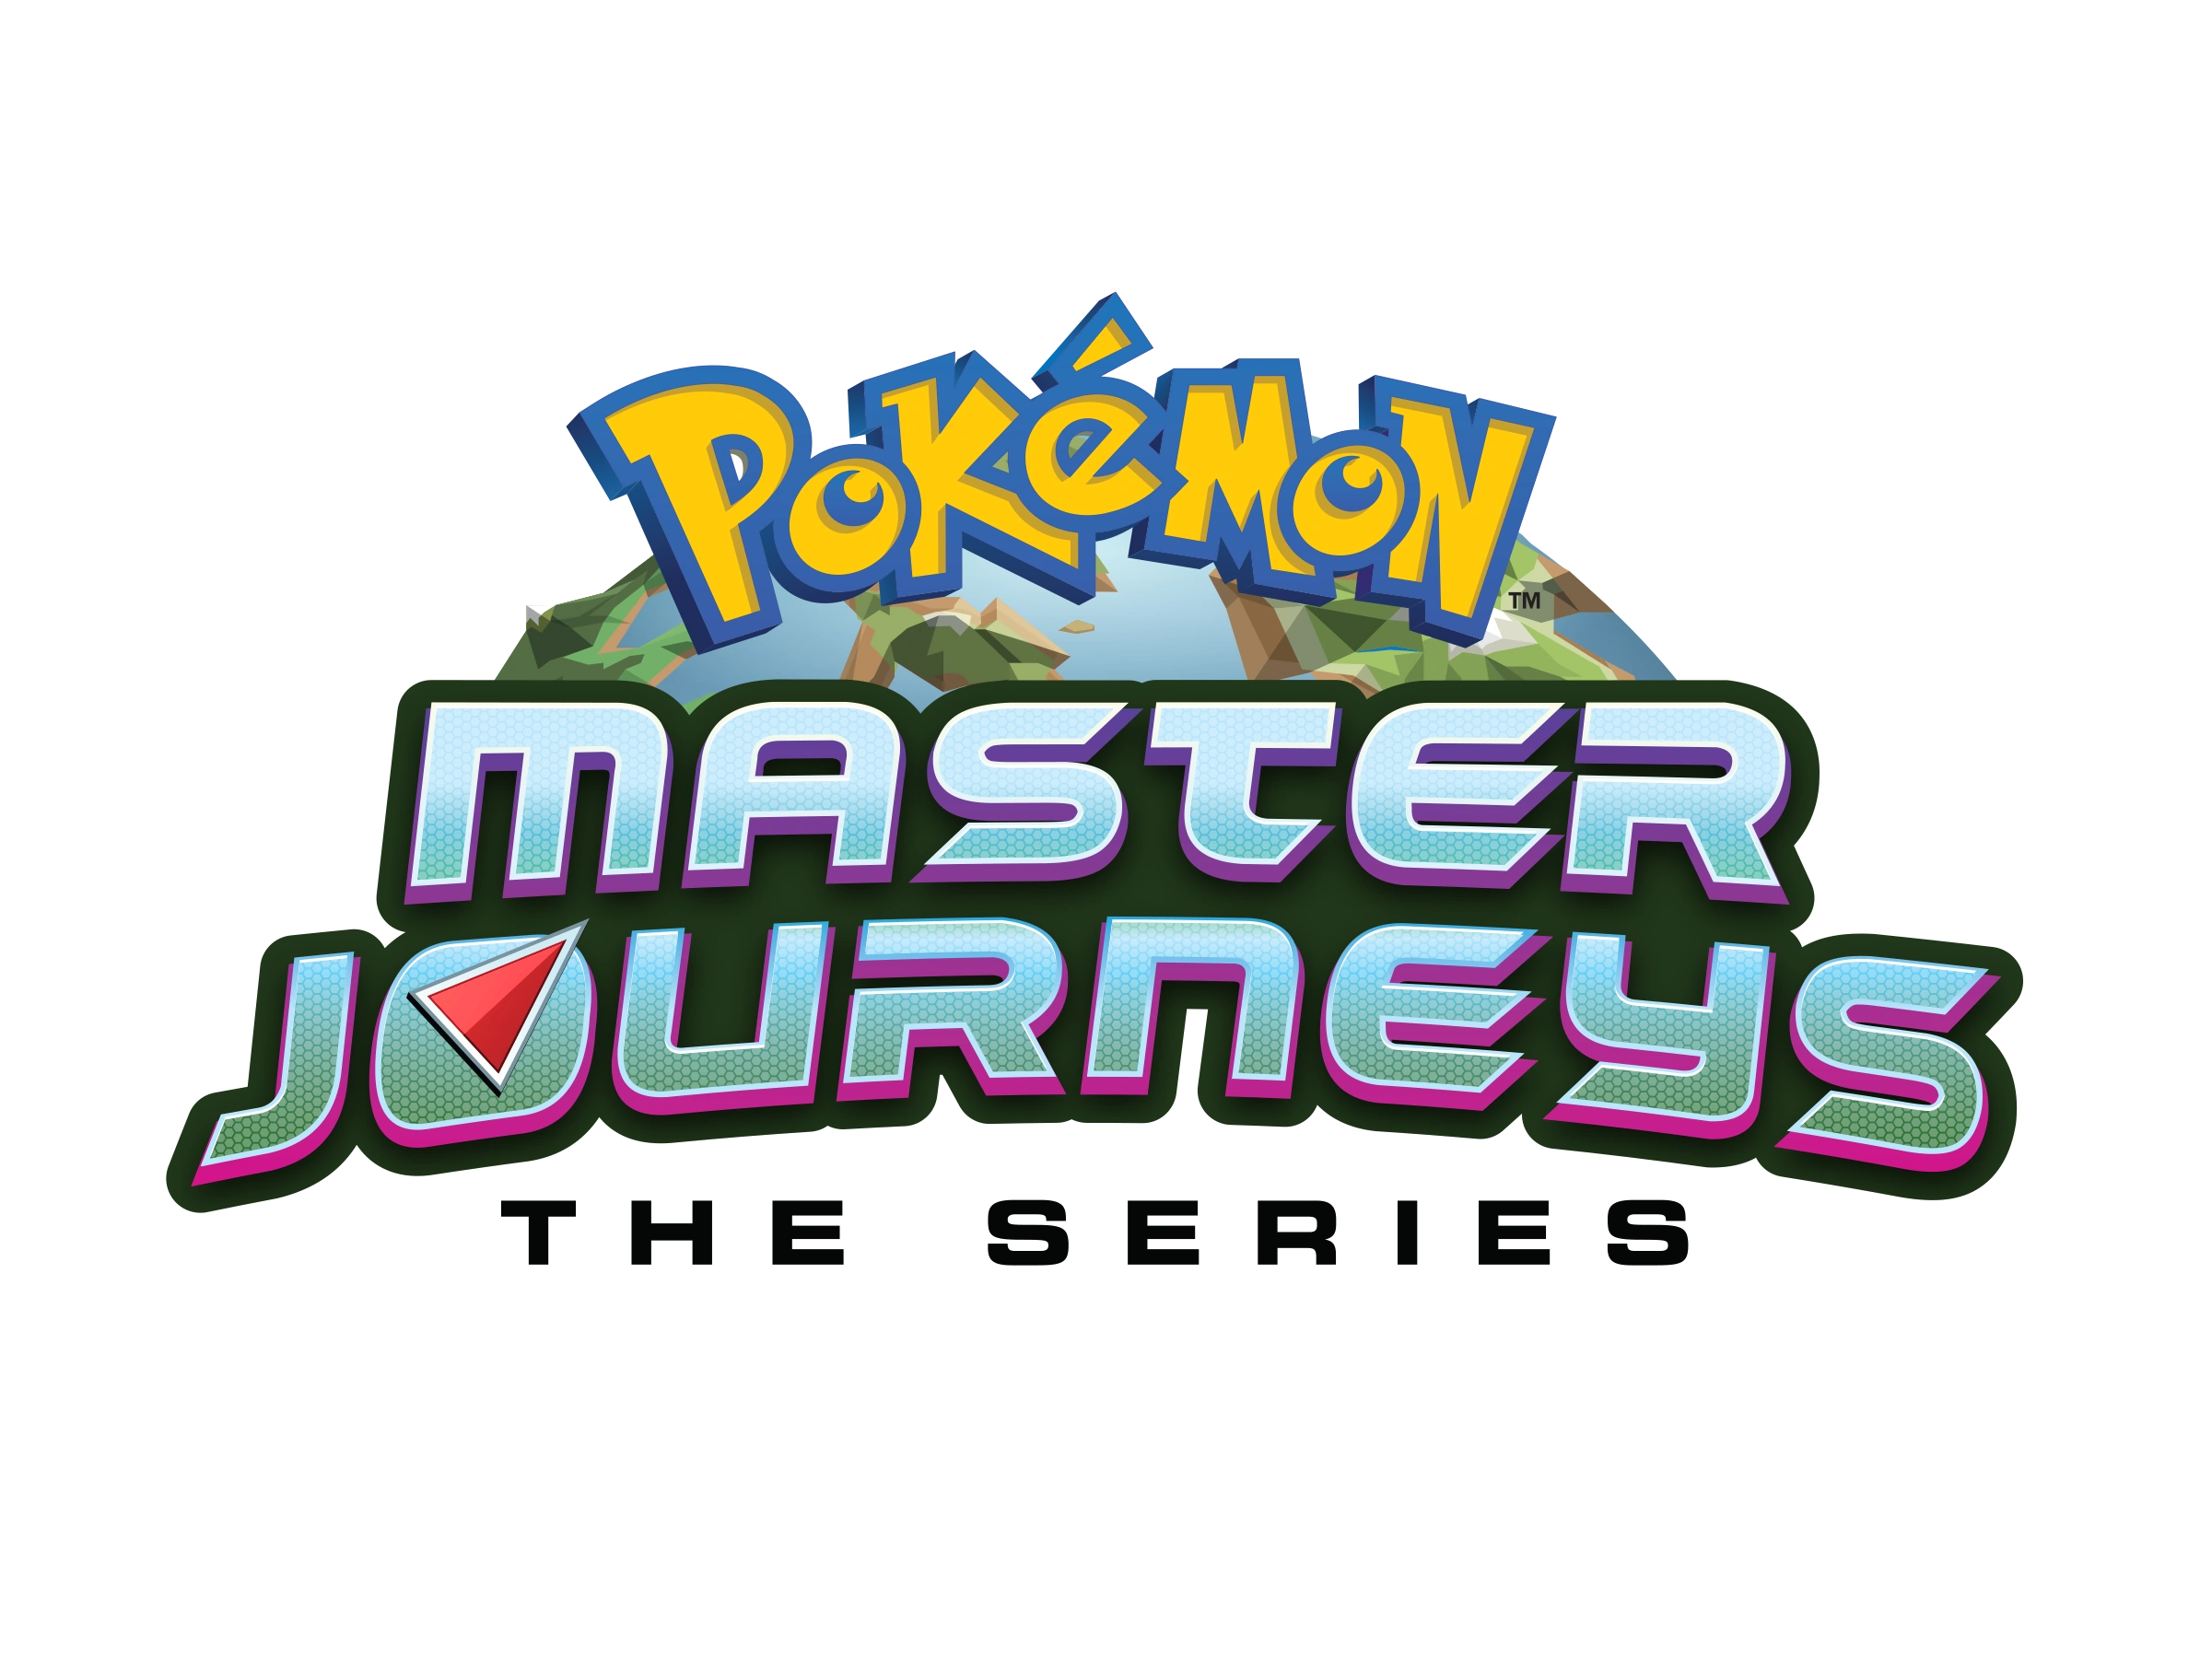 Watch Episodes of Pokémon Master Journeys: The Series on Pokémon